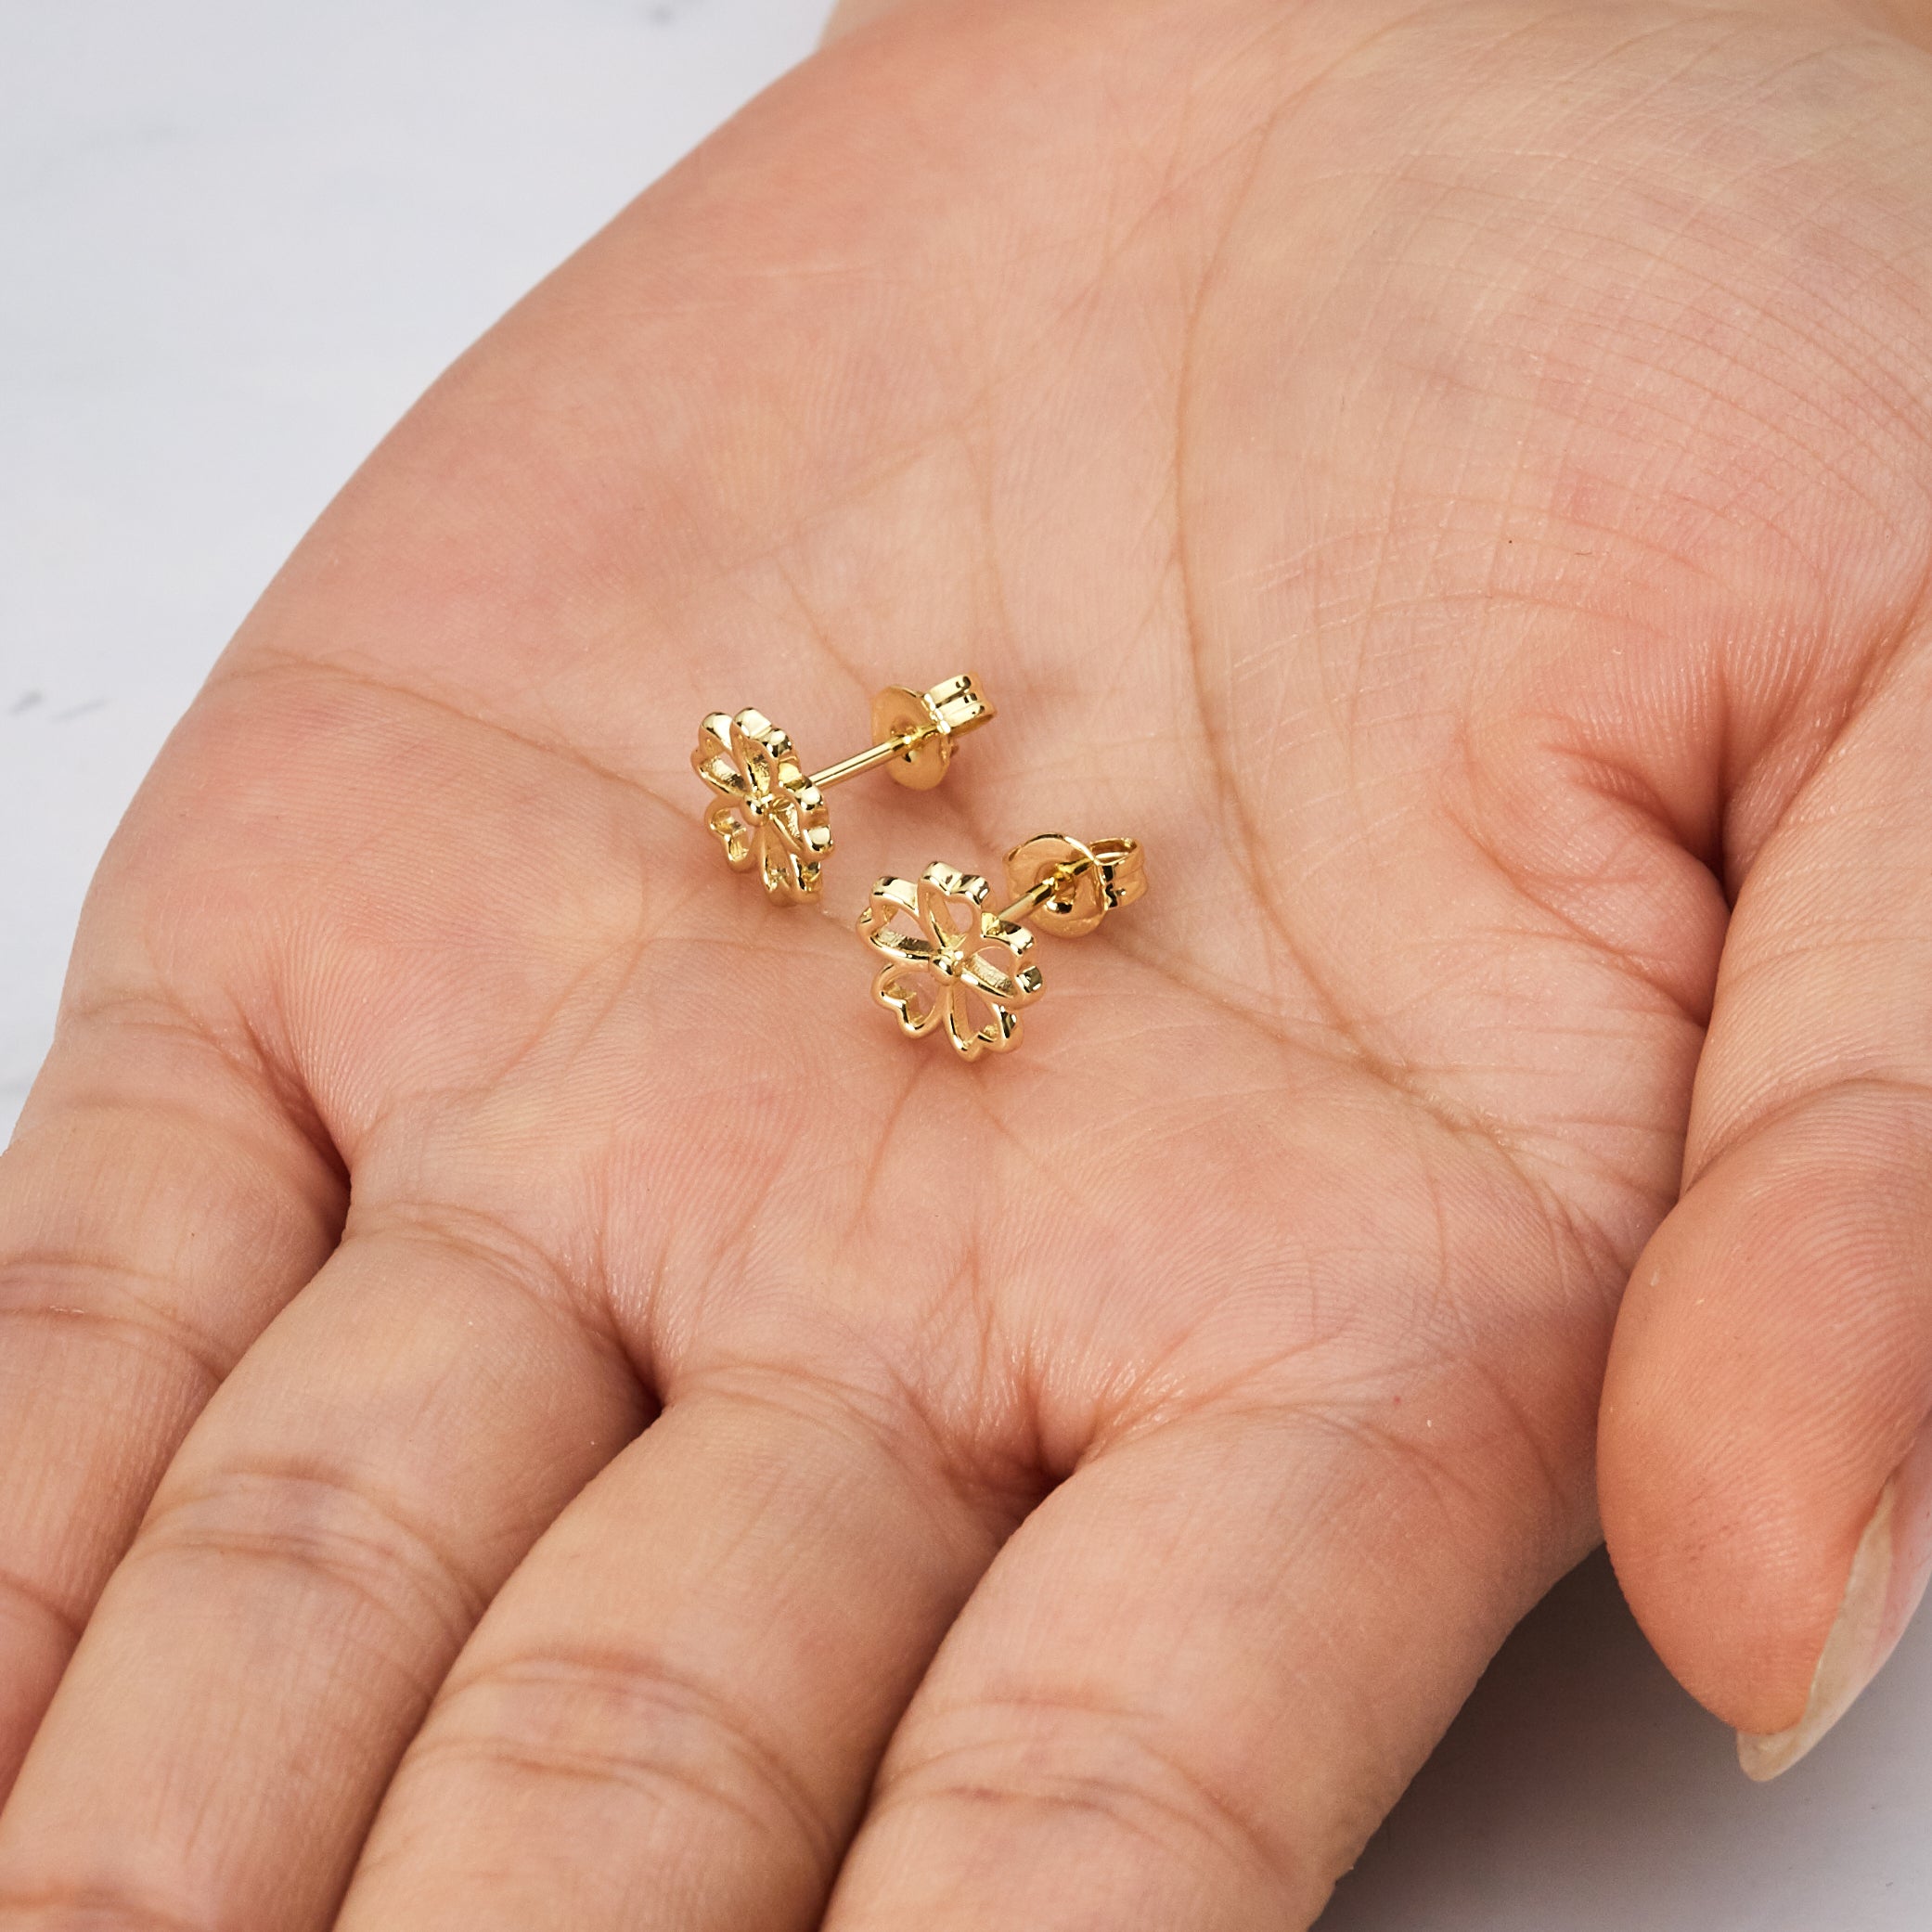 Gold Plated Flower Petal Earrings